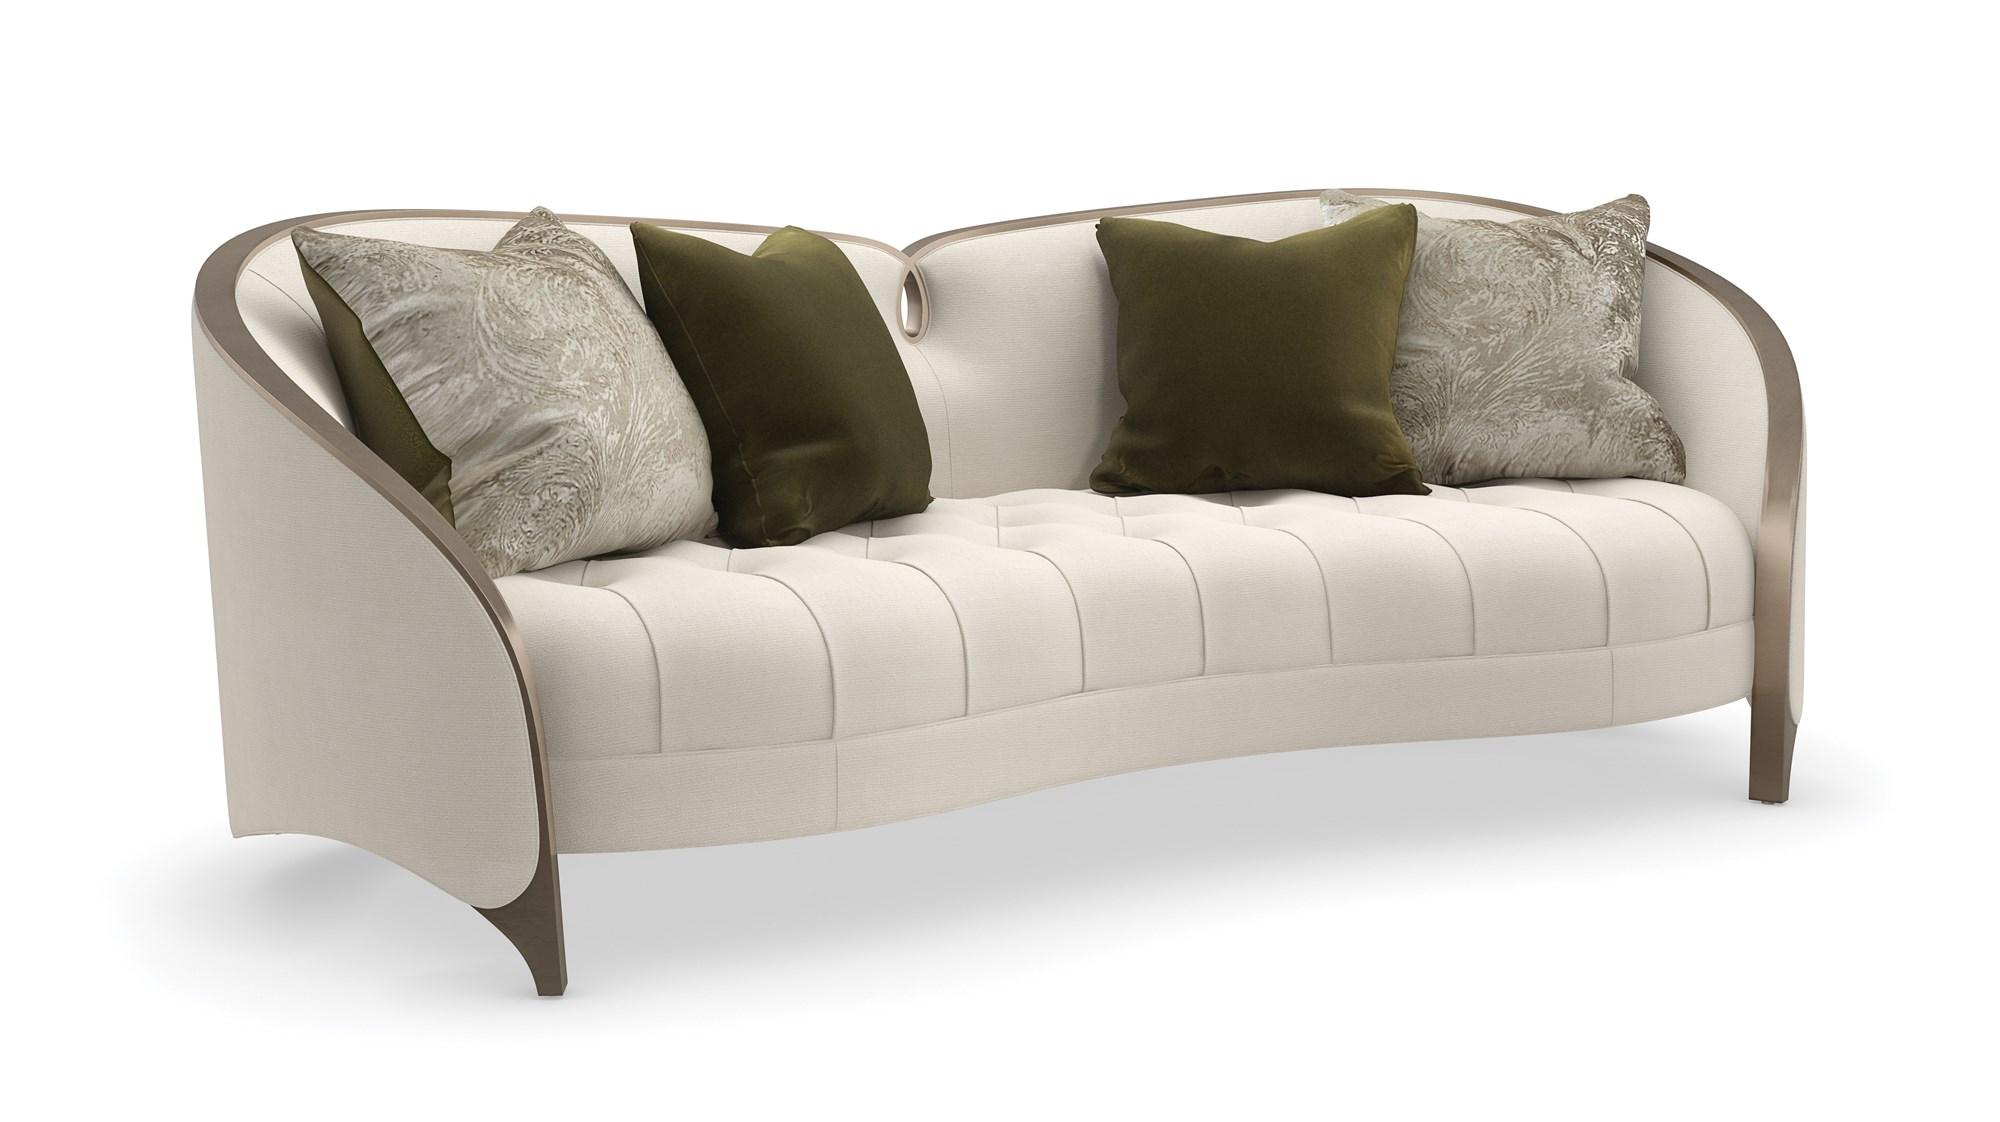 Traditional Sofa VALENTINA SOFA C110-422-011-A in Cream, Gold Fabric